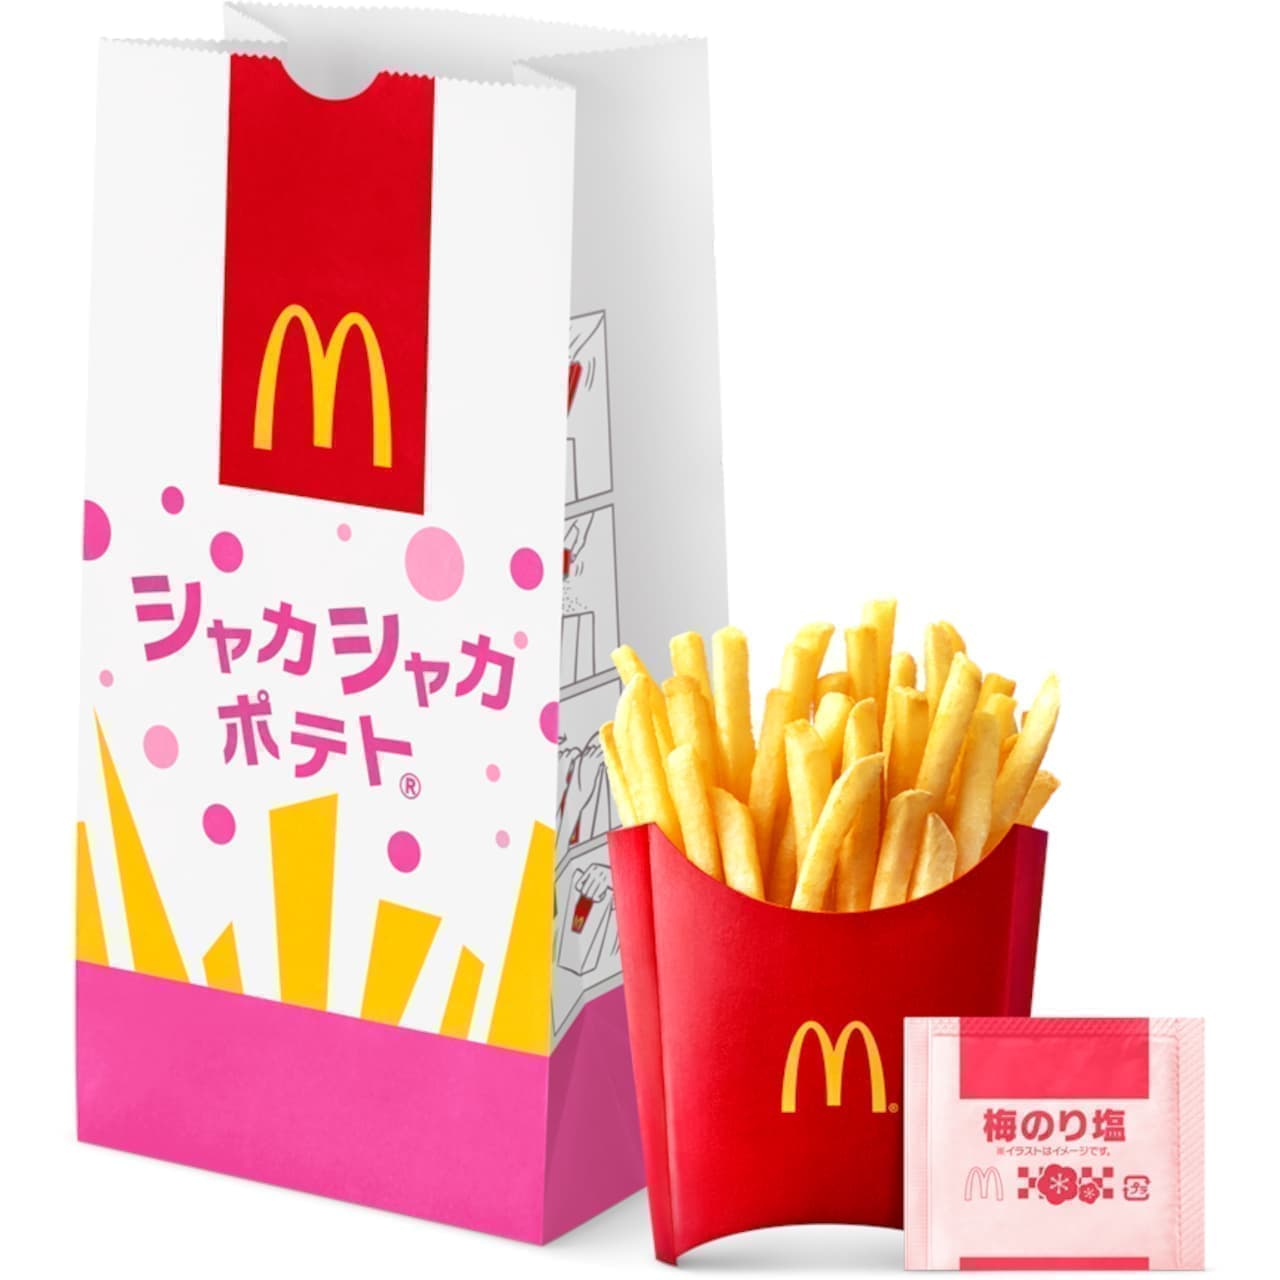 McDonald's "Shakashaka Potato Ume Norishio Flavor